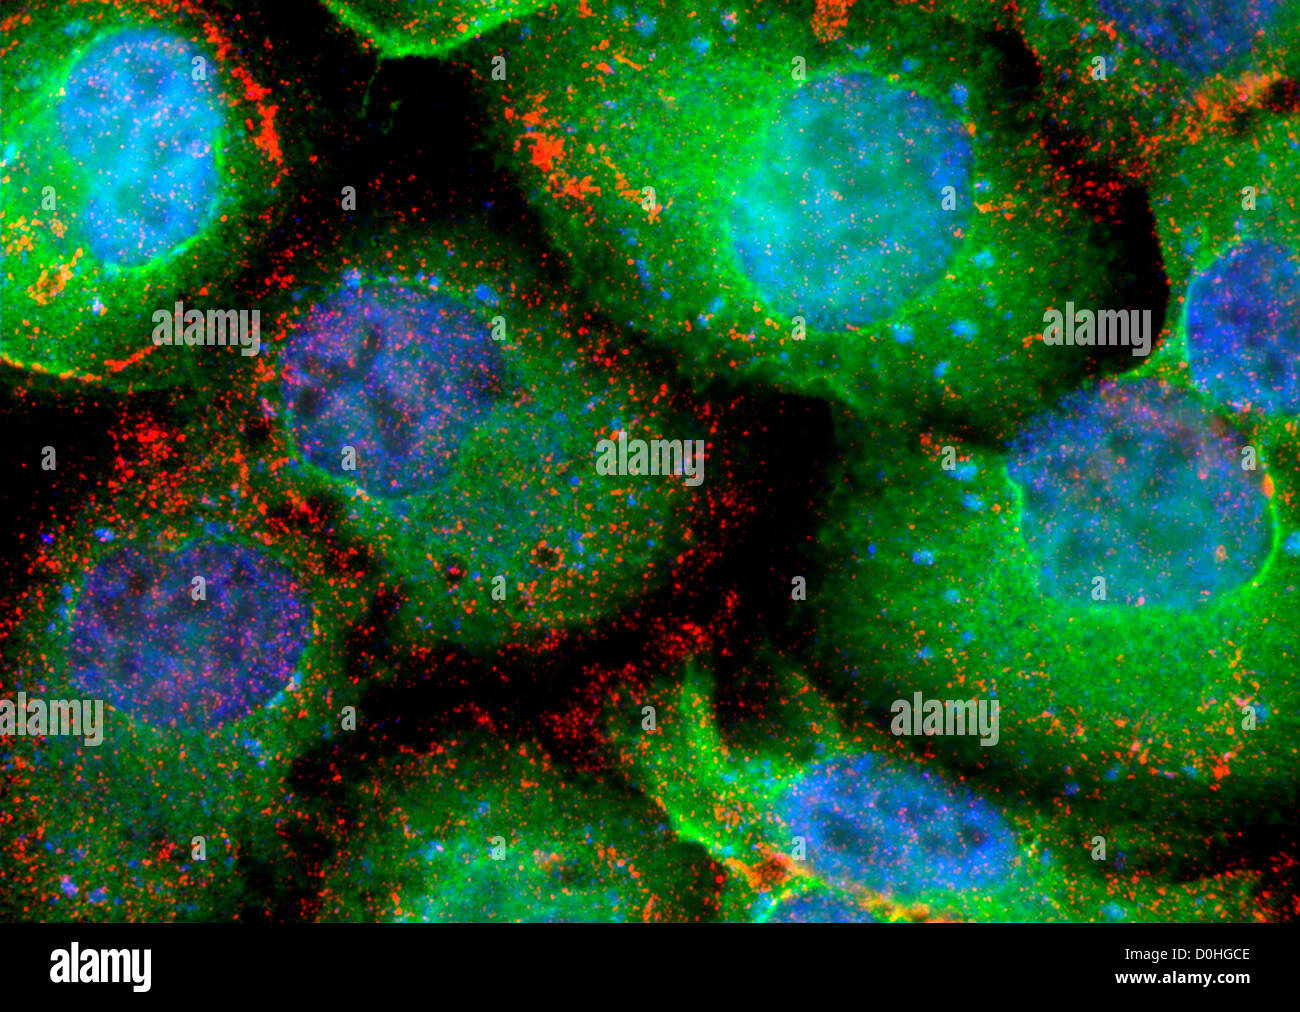 Supertough Cancer Cells, Microscopic View Stock Photo